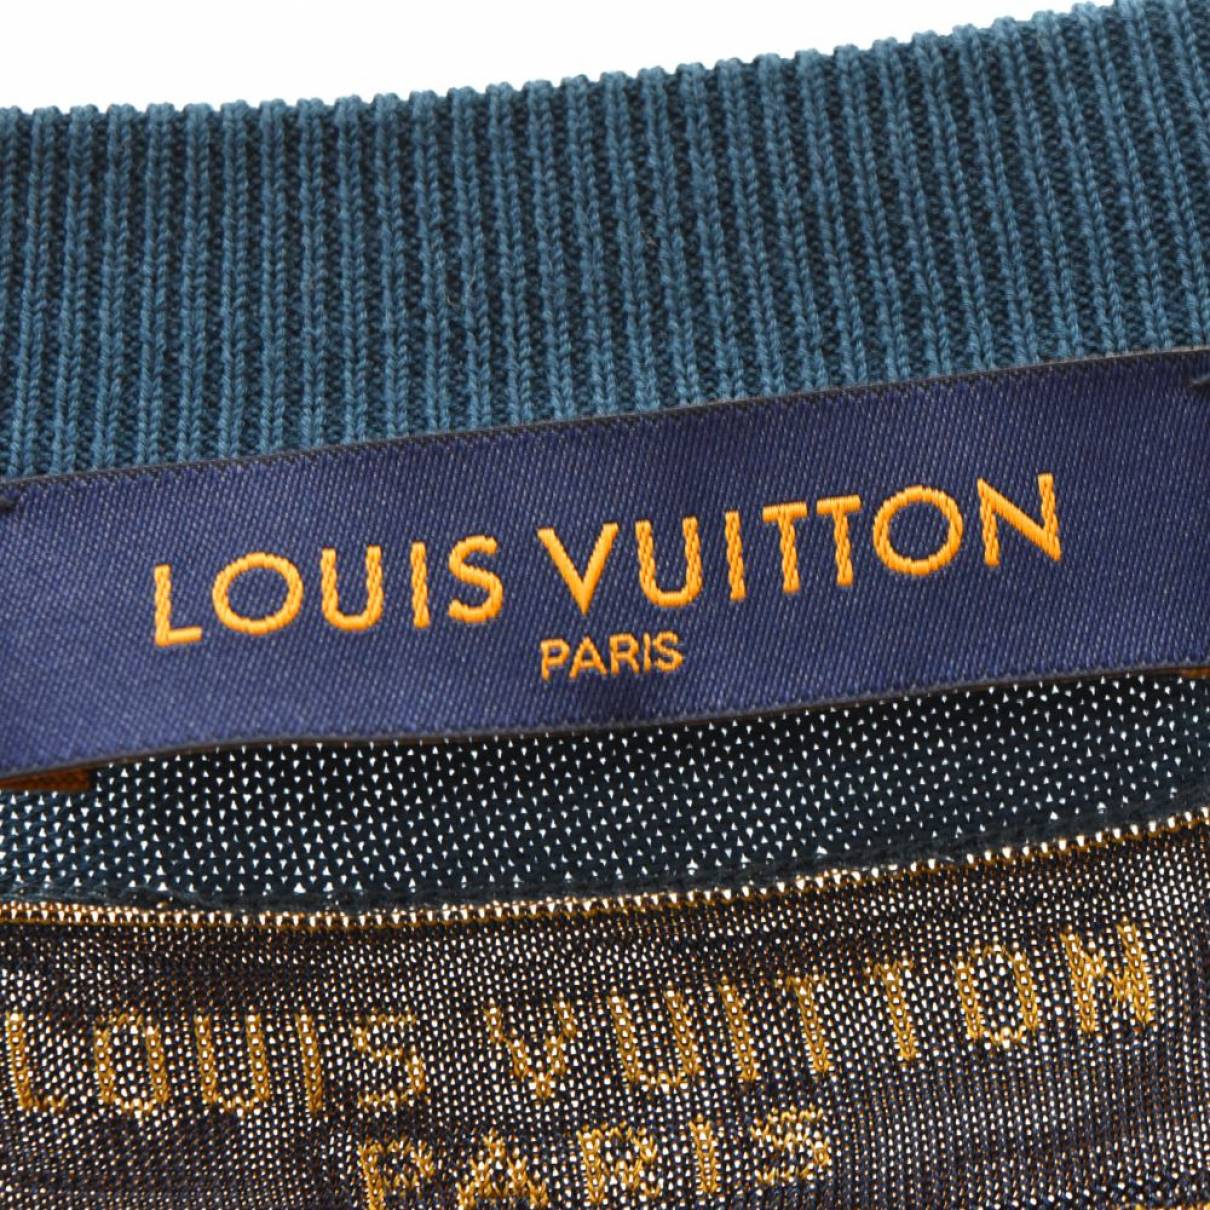 Louis Vuitton Louis Vuitton Jazz Trumpeter Signature Crewneck T Shirt